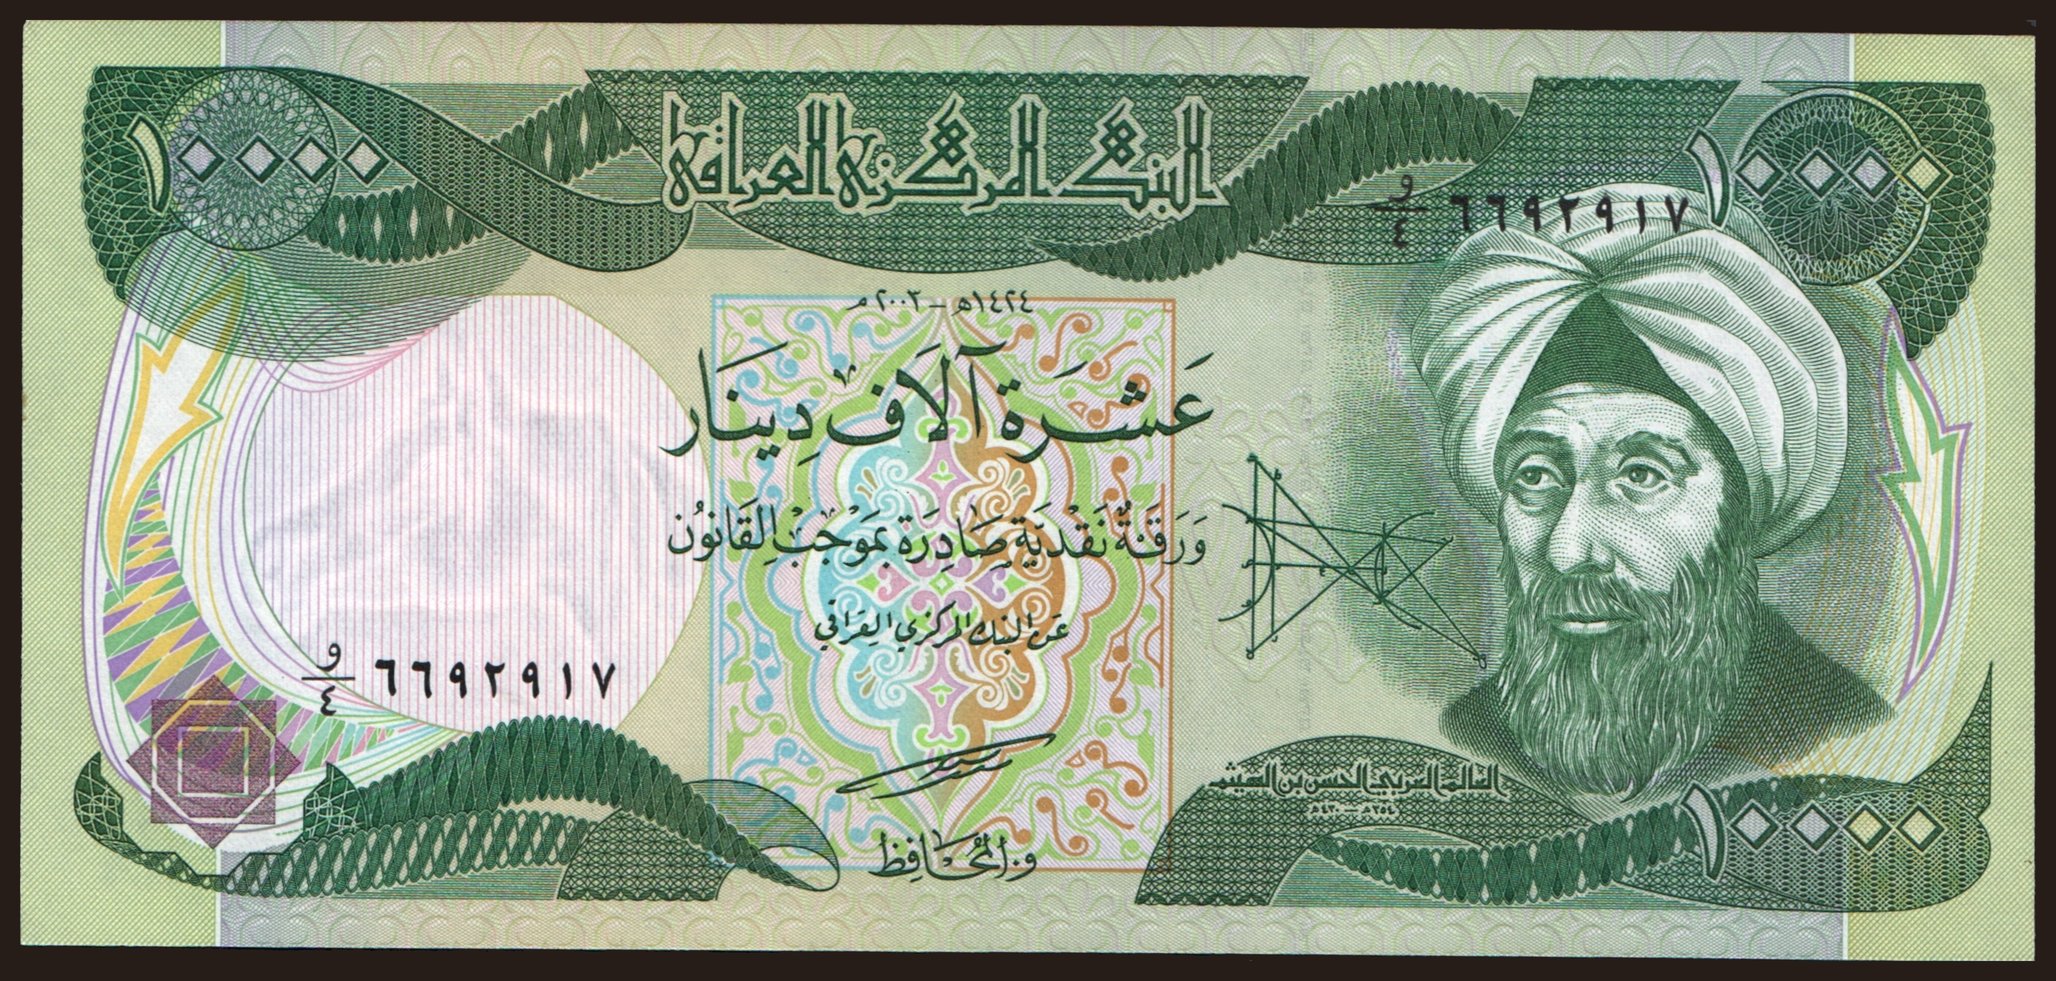 10.000 dinars, 2003